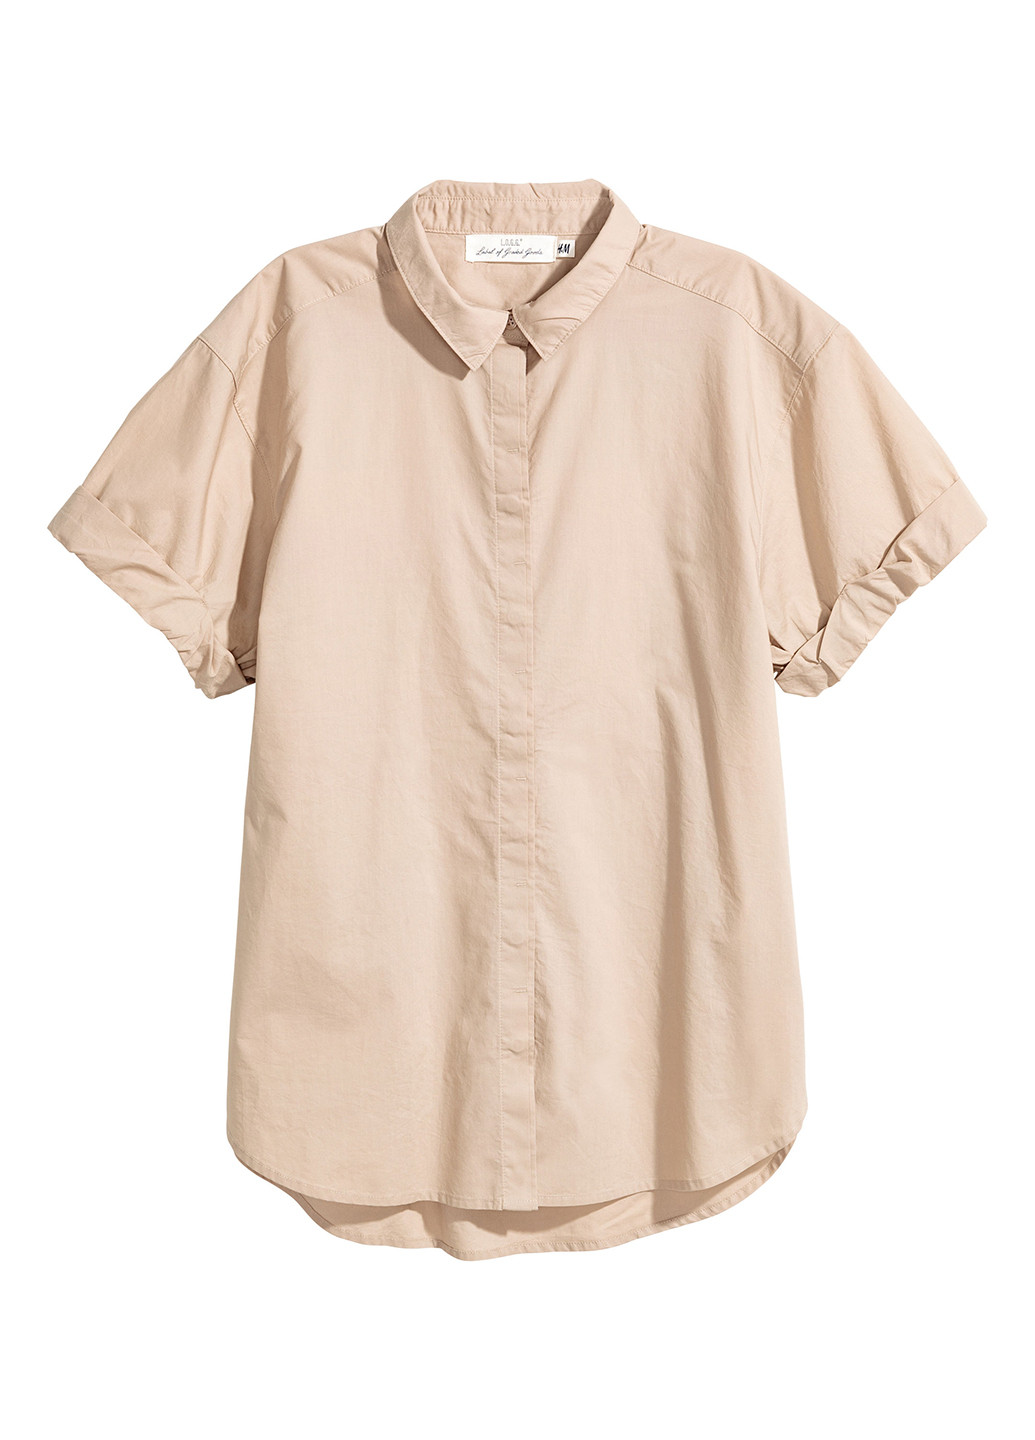 Бежевая летняя блуза с коротким рукавом H&M